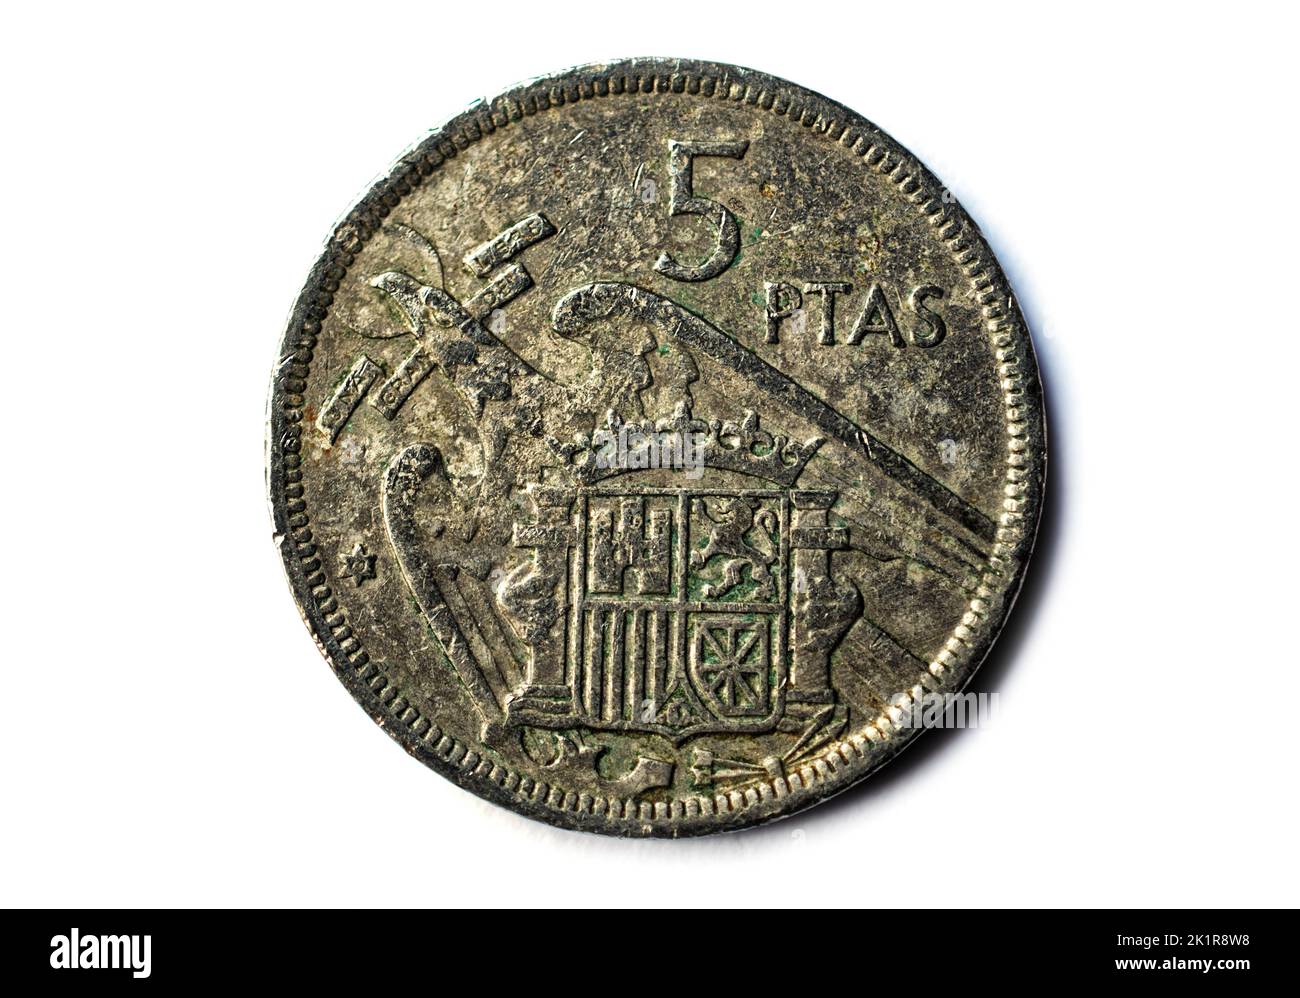 Photo coins Spain, 1975,5 Ptas Stock Photo